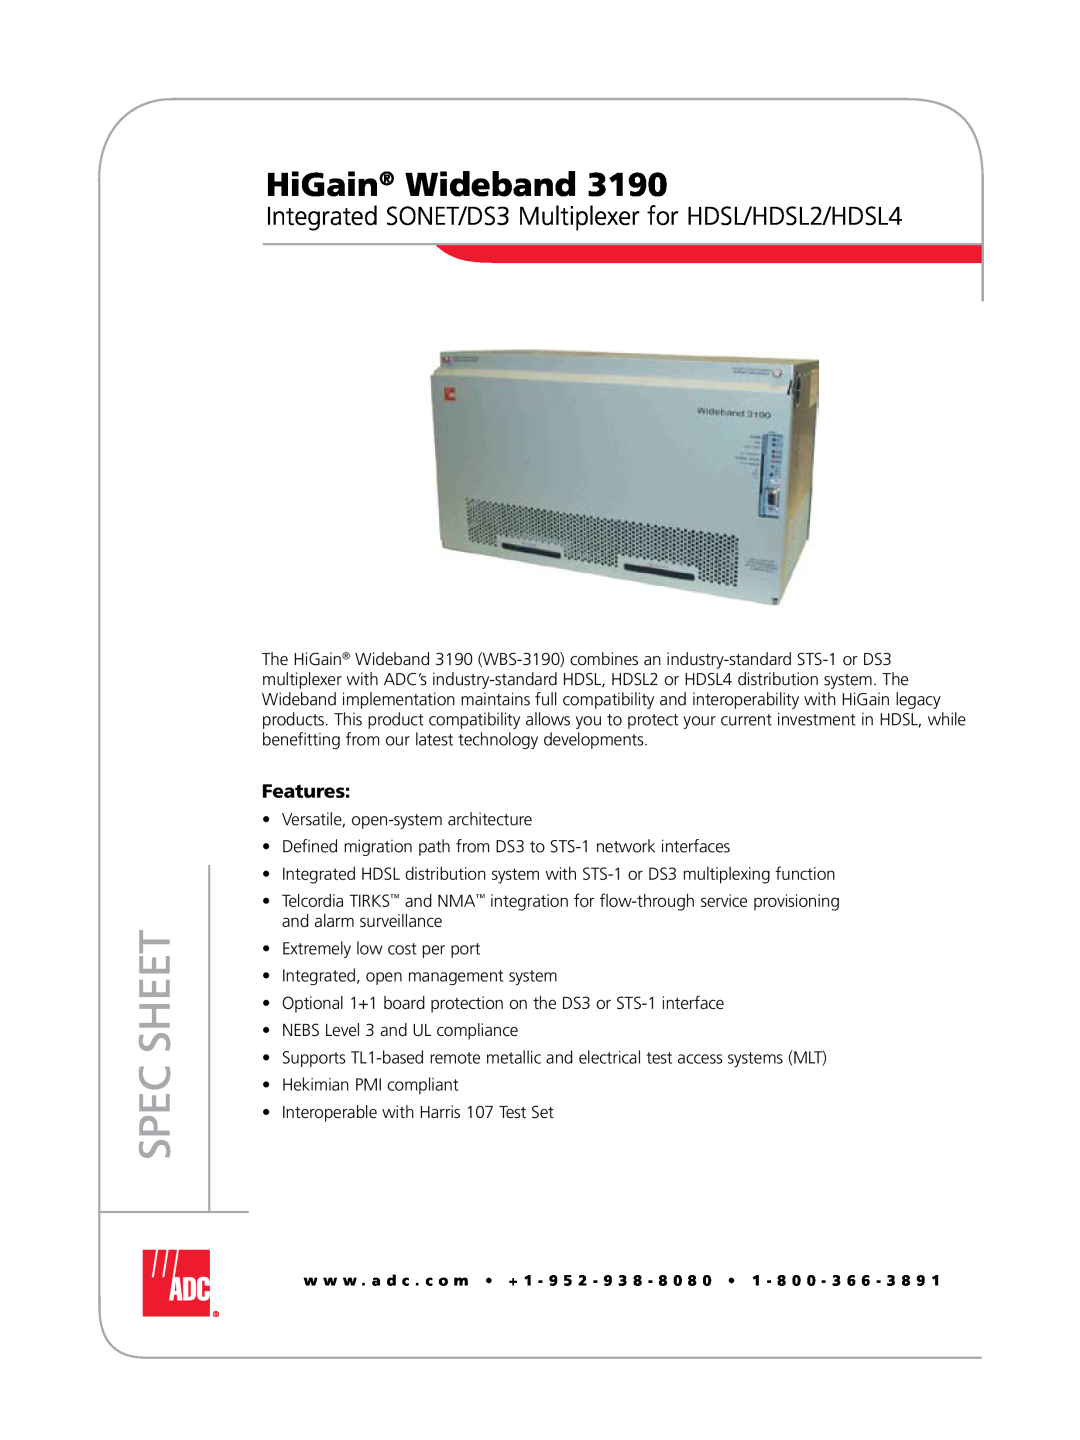 ADC WBS-3190 manual HiGain Wideband, Integrated SONET/DS3 Multiplexer for HDSL/HDSL2/HDSL4, Features, Spec Sheet 